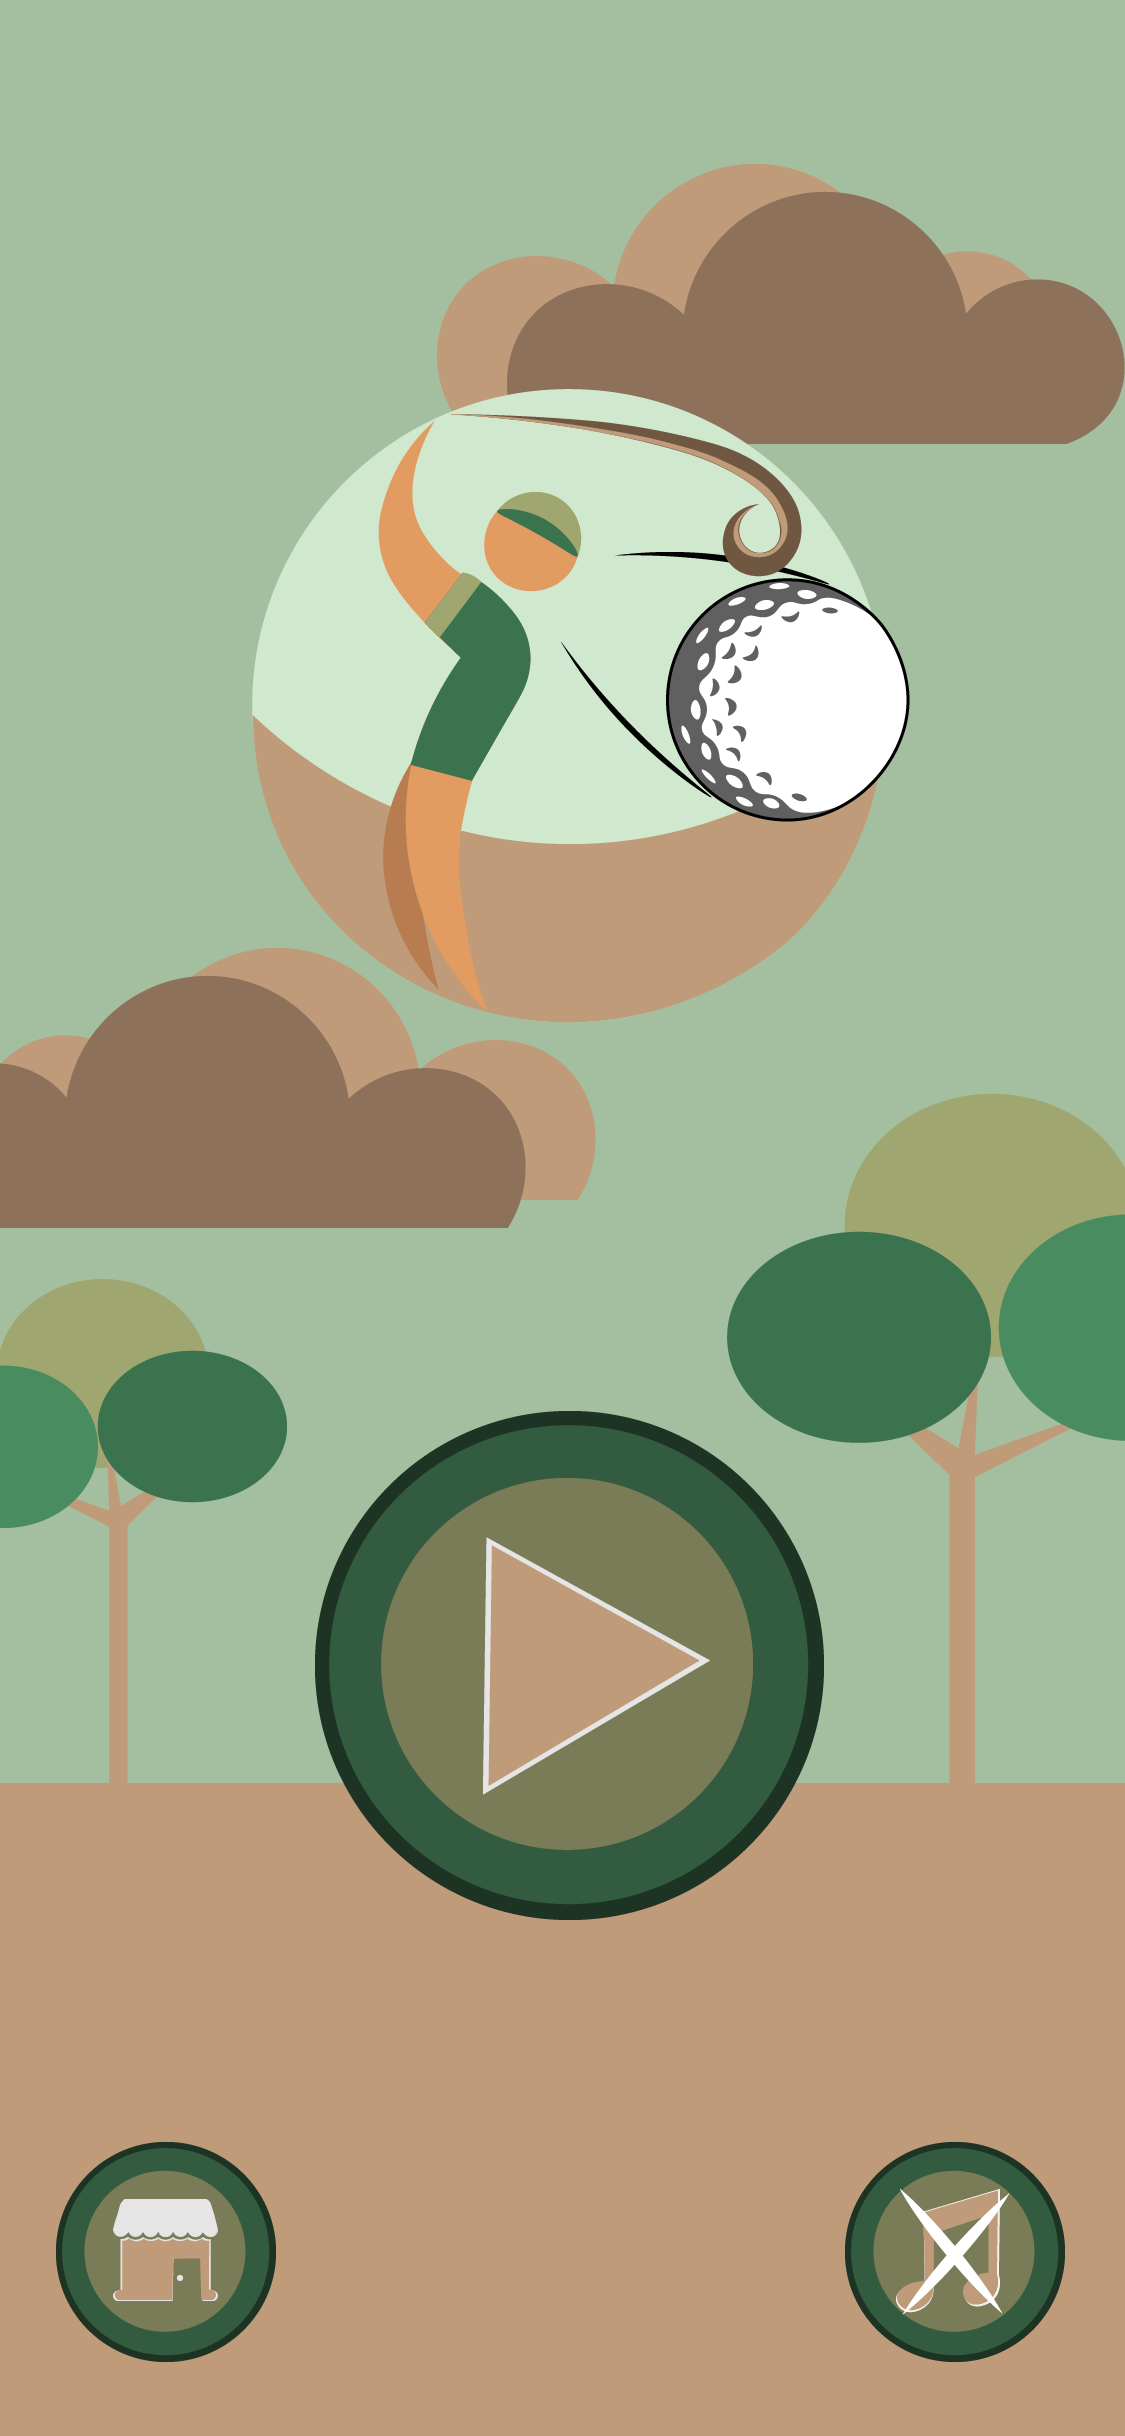 Mini-Golf Mobile Game User Interface